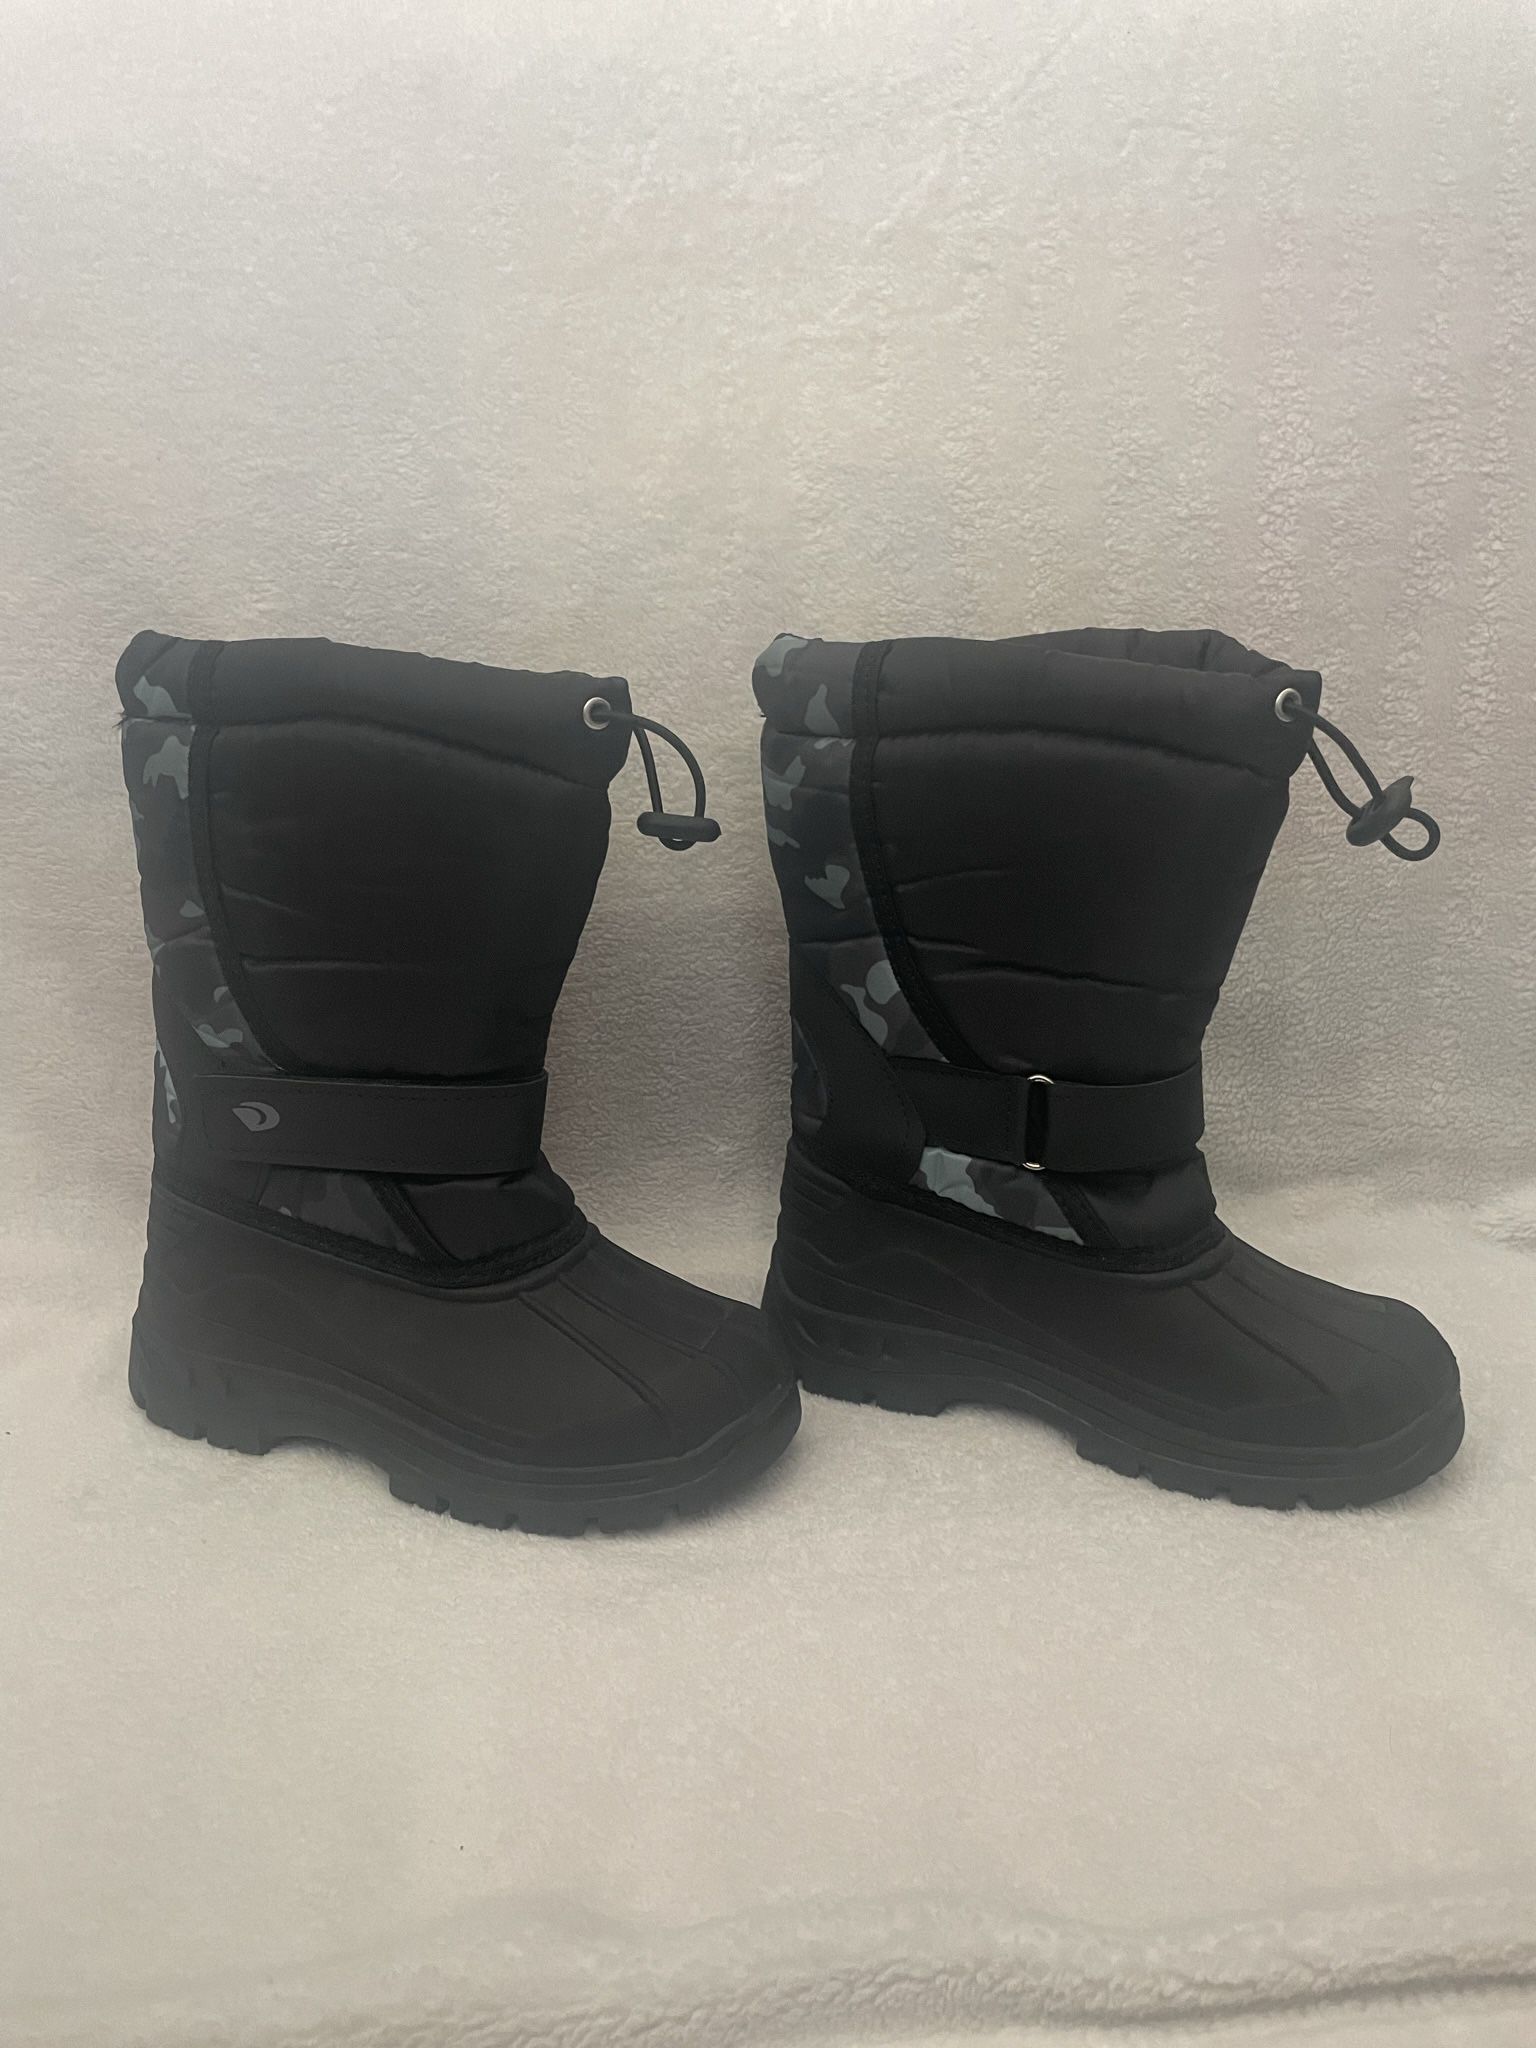 Unisex Boys or Girls Snow/Rain Boots Size 1.5